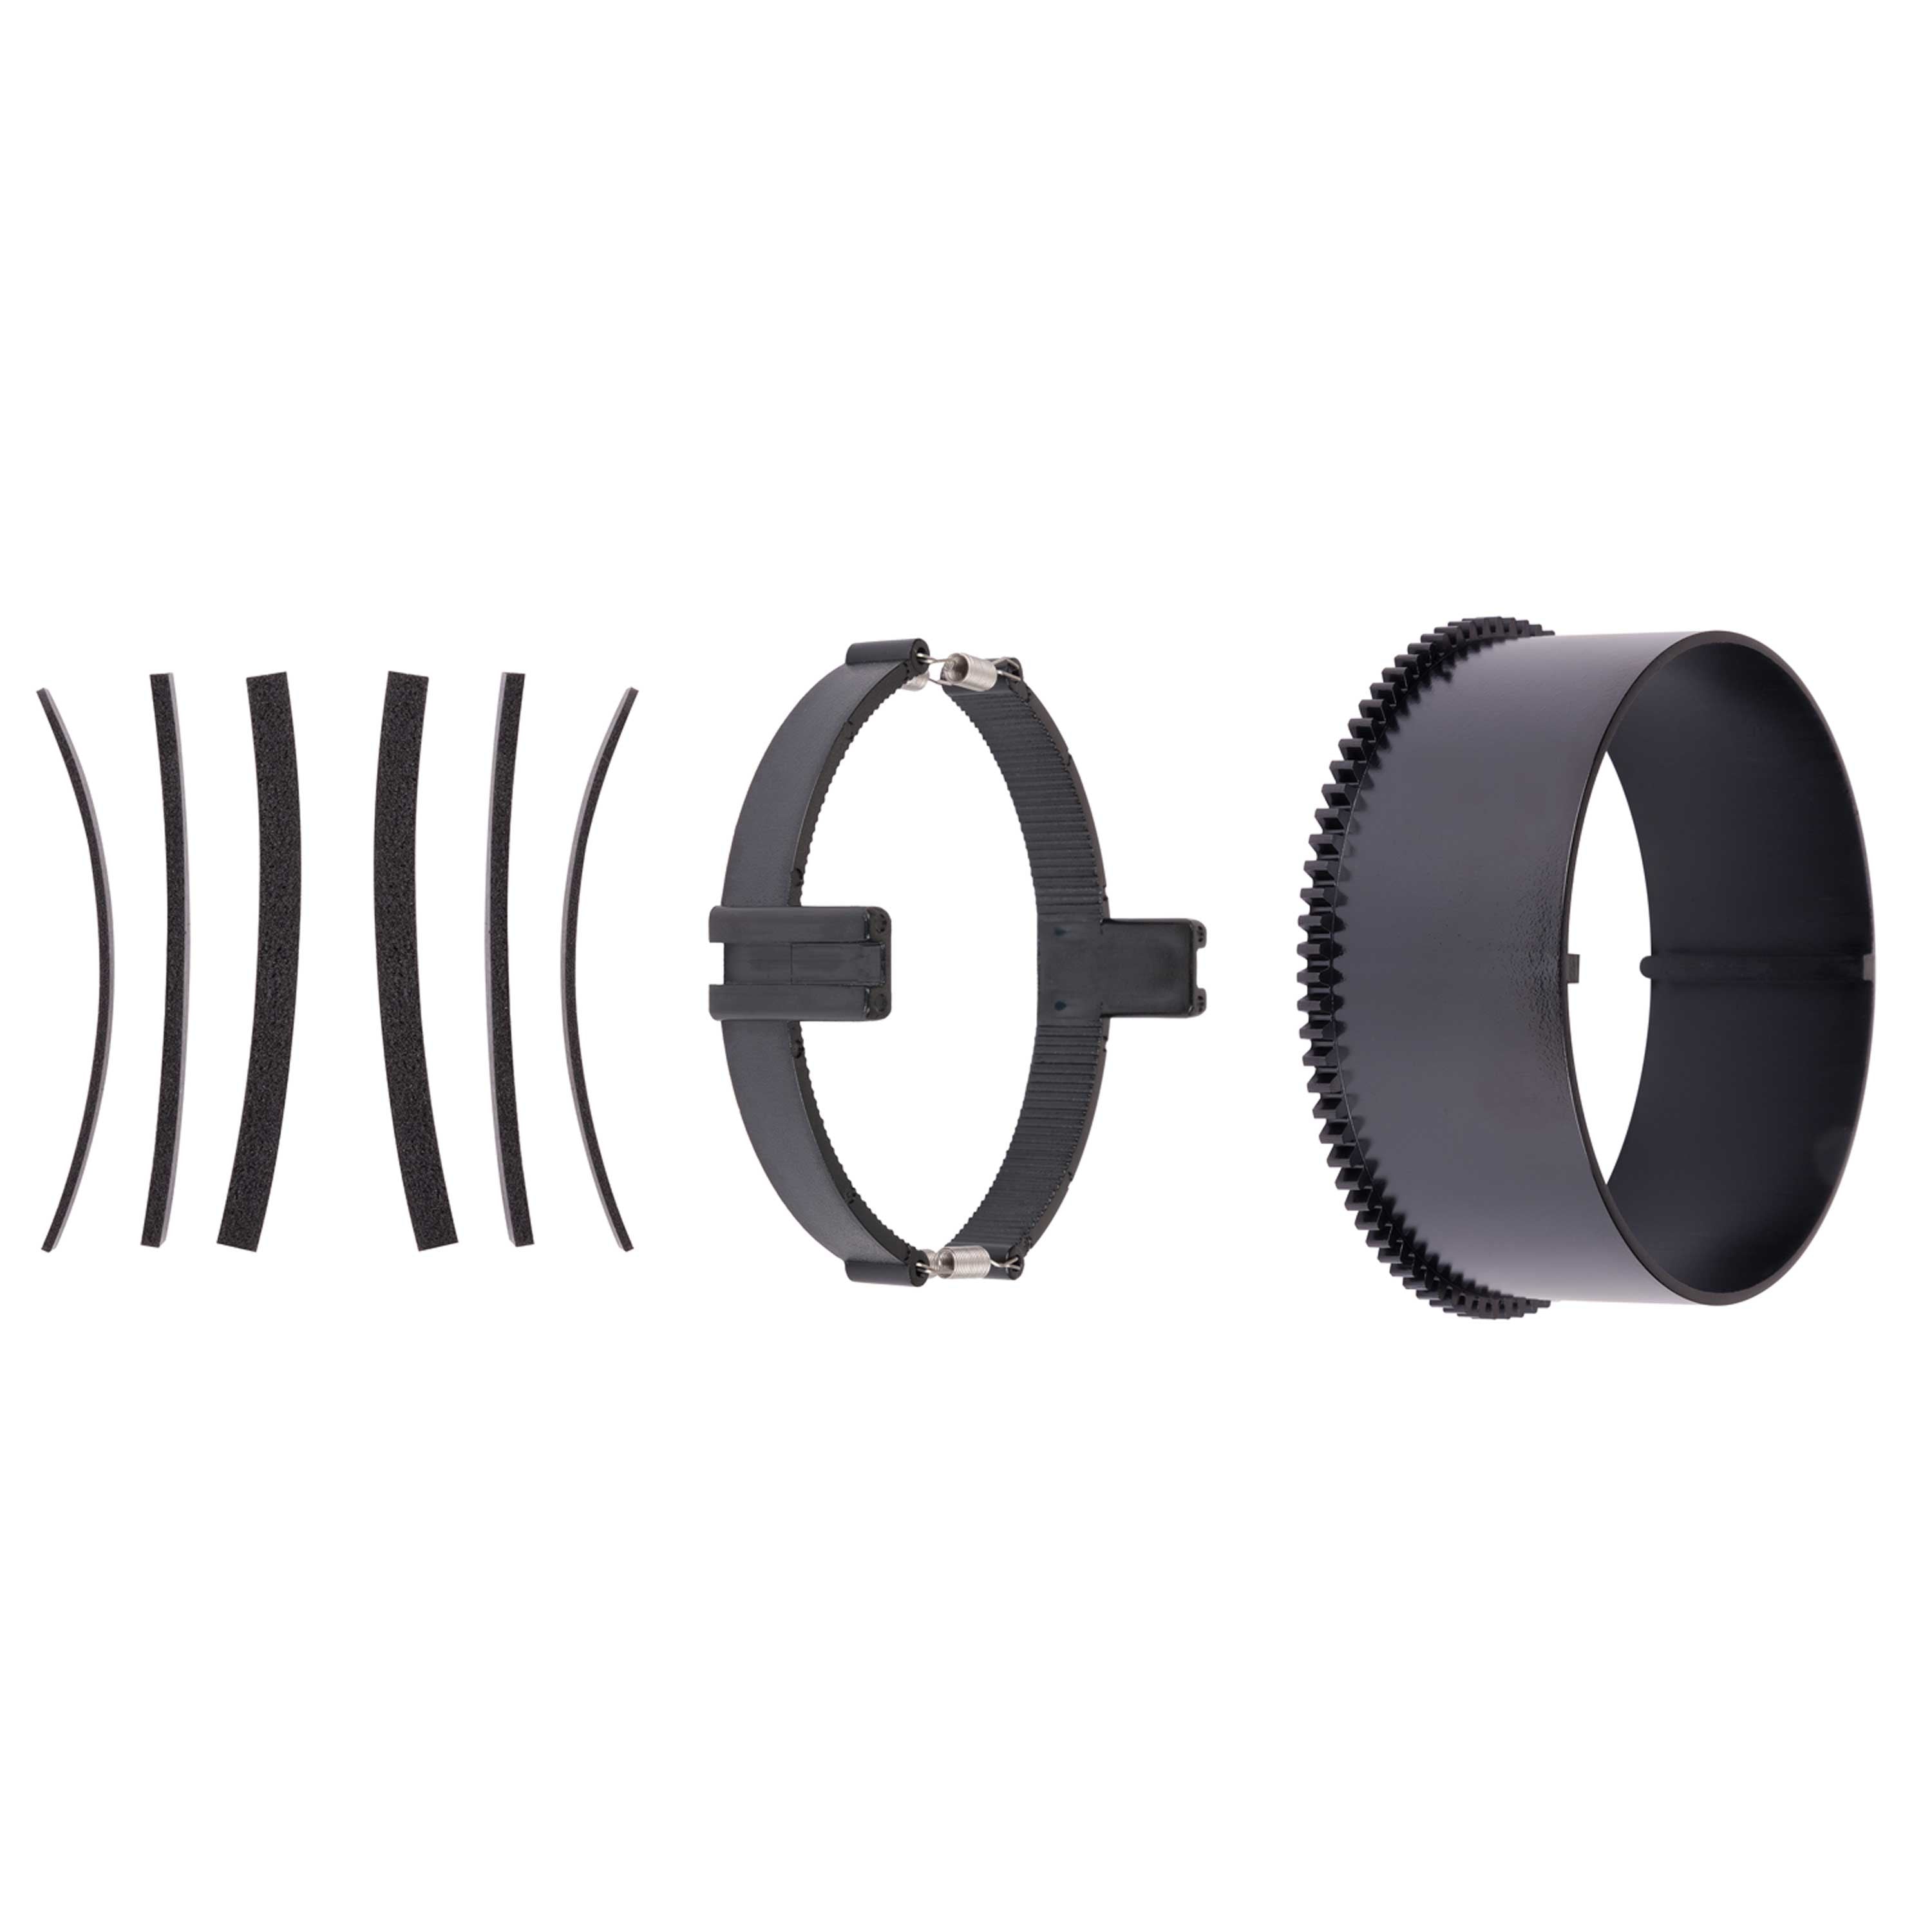 Universal DSLR Zoom Gear for Lenses up to 2.8-inch Diameter